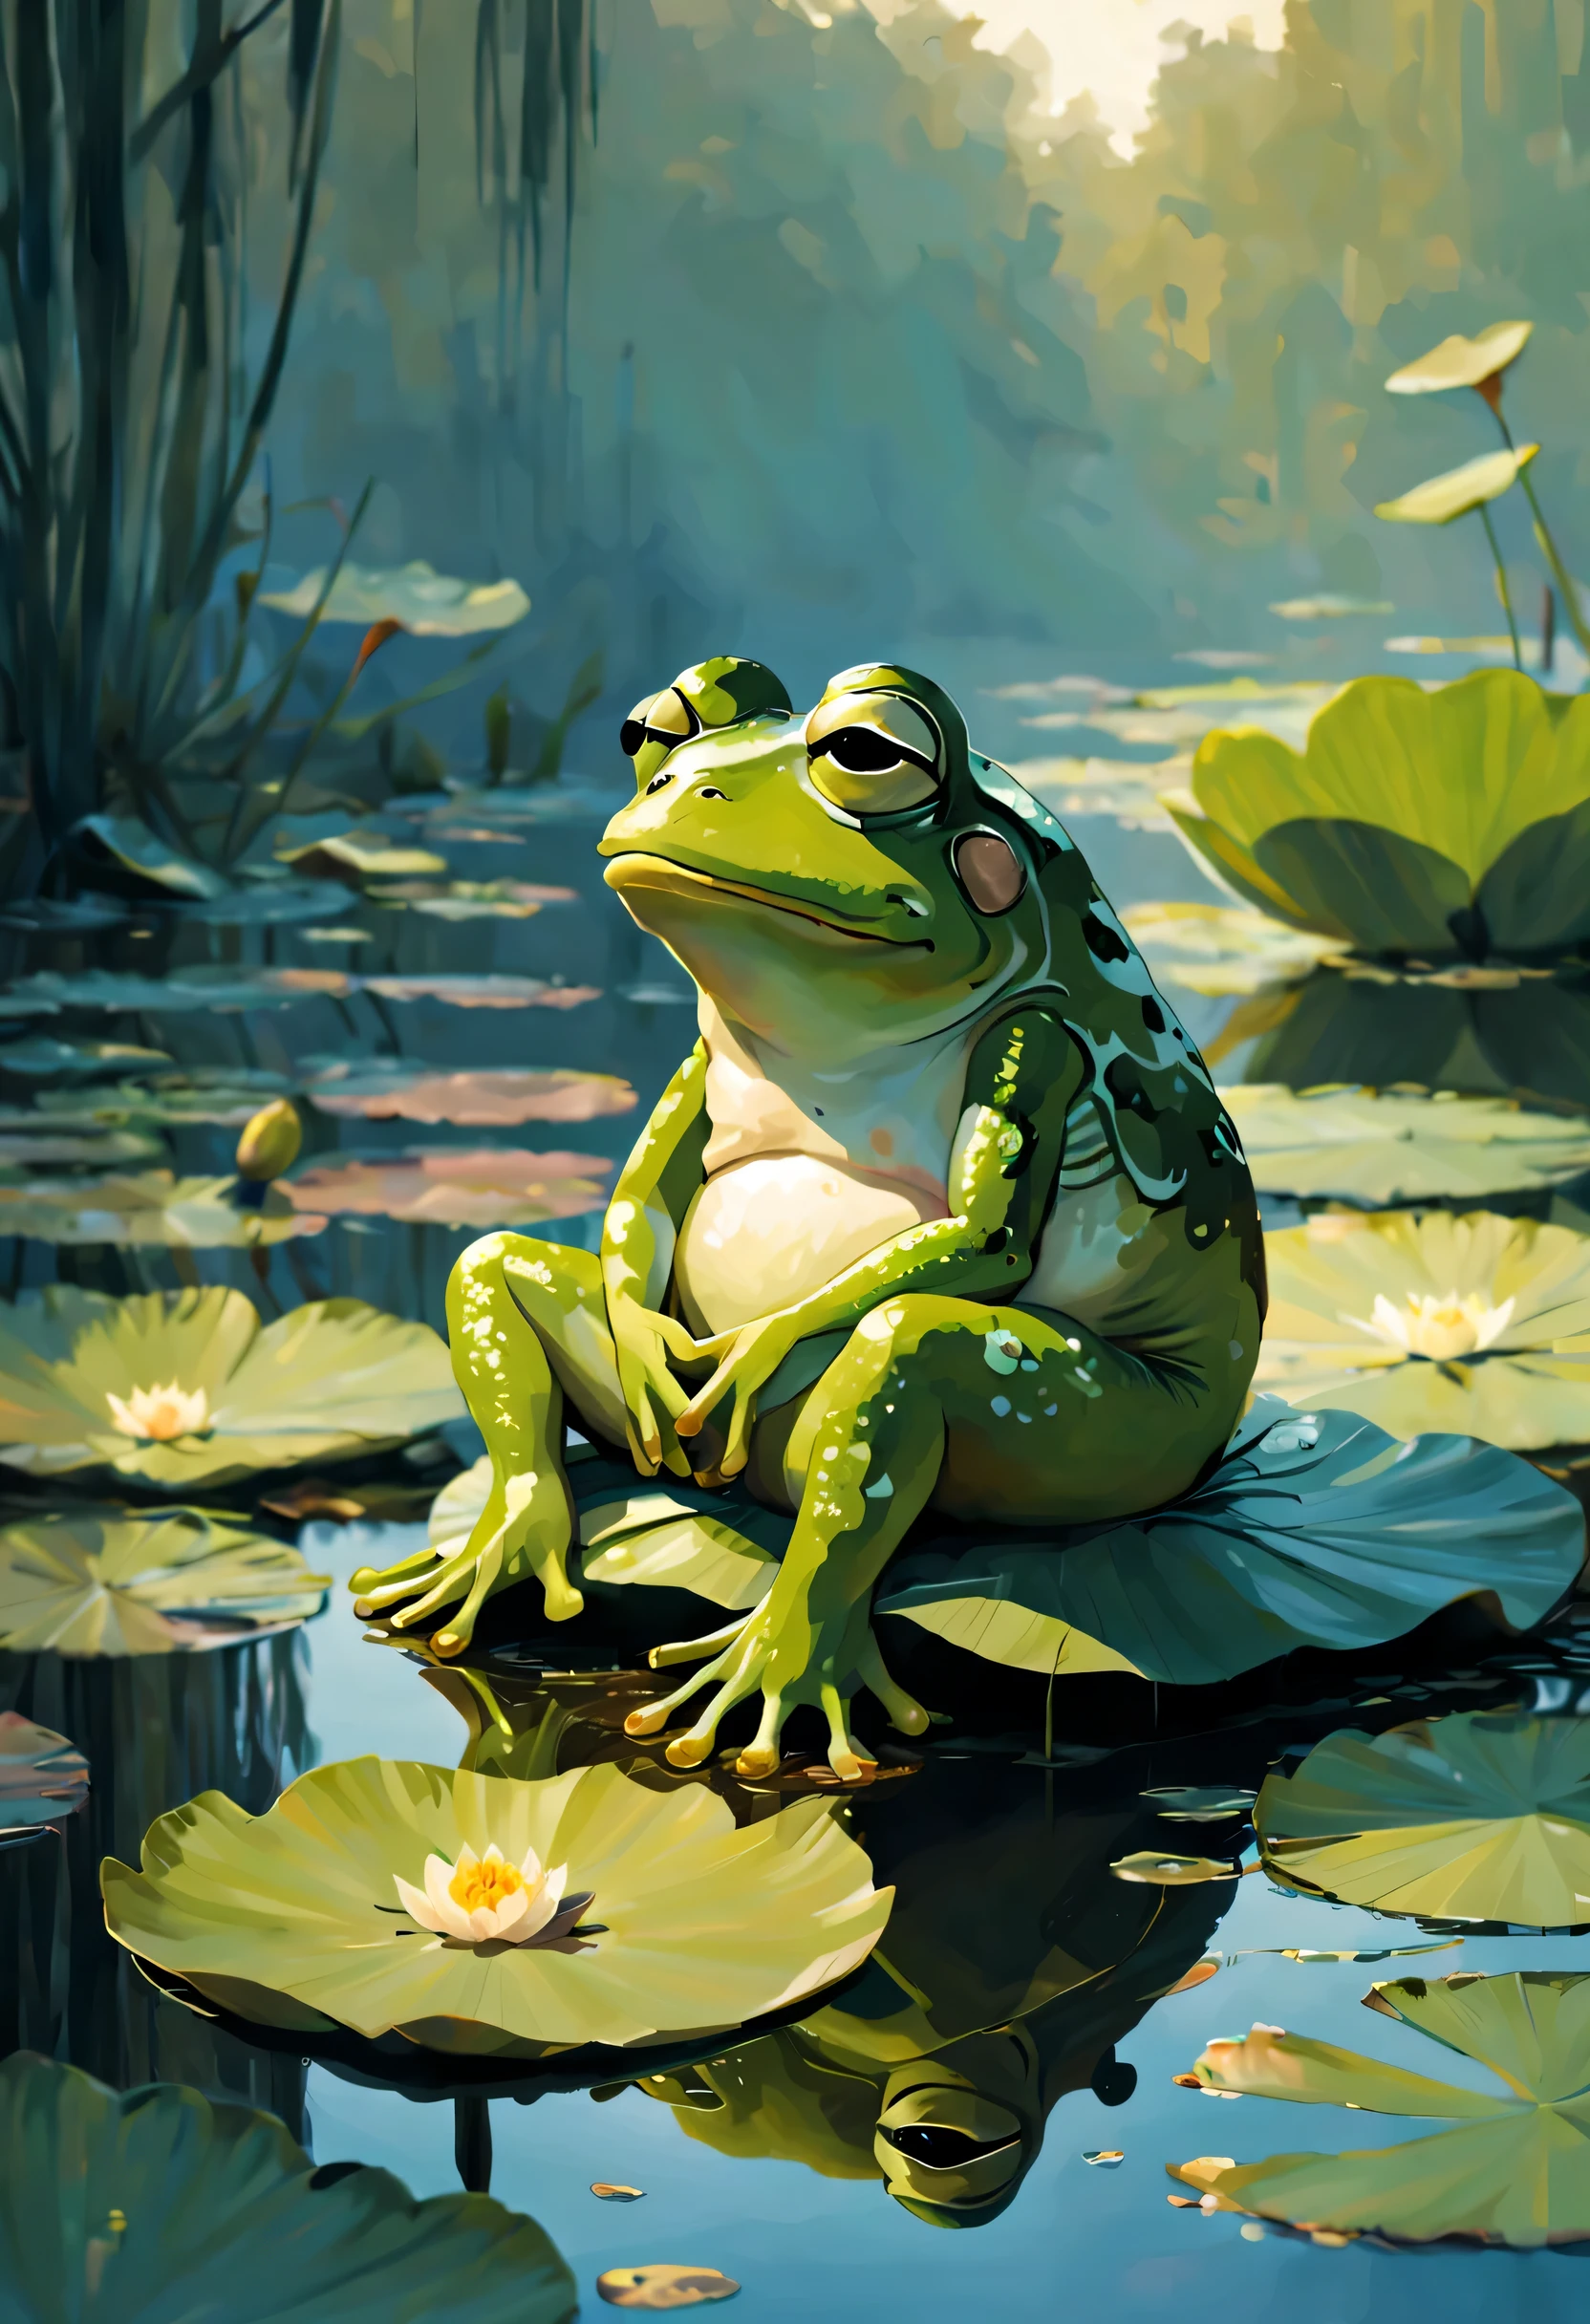 A 青蛙 sitting on a water lily，（現在佩佩_青蛙：1.2），不幸的，全身，沼澤，側面圖，盤腿而坐、
（布面油畫：0.1）、底片燈、傑里米·曼、深色鏡片、蔬菜、亮點品質，高解析度，非常詳細的單元配置，傑作，